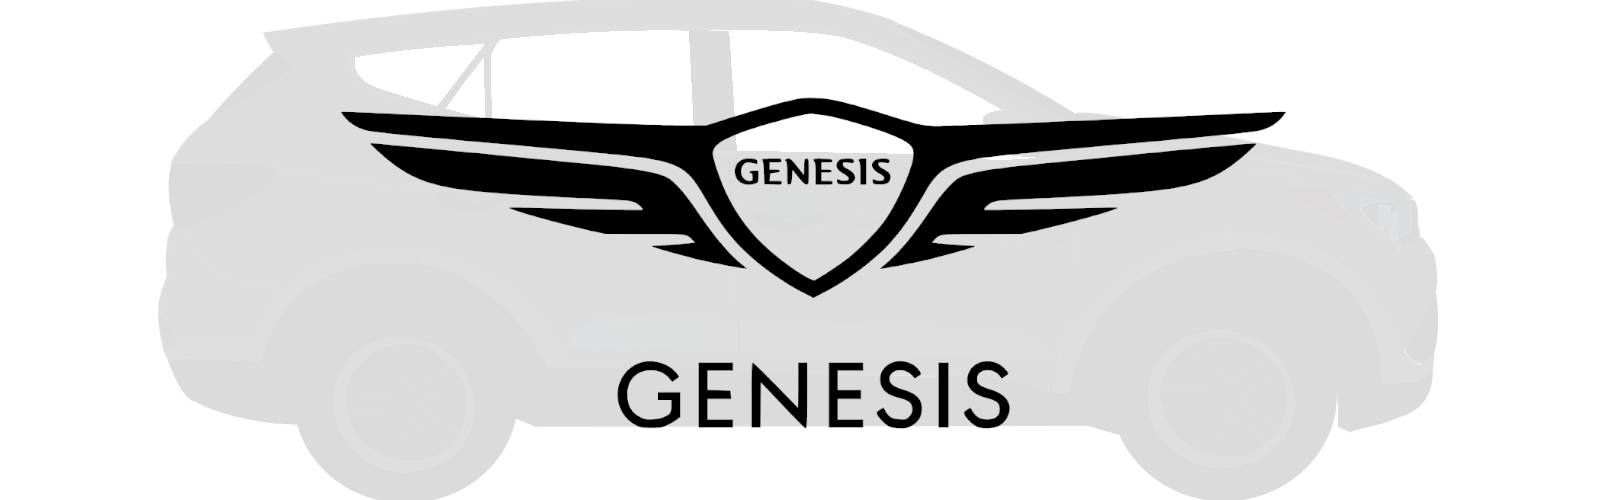 Genesis SUV Modelle